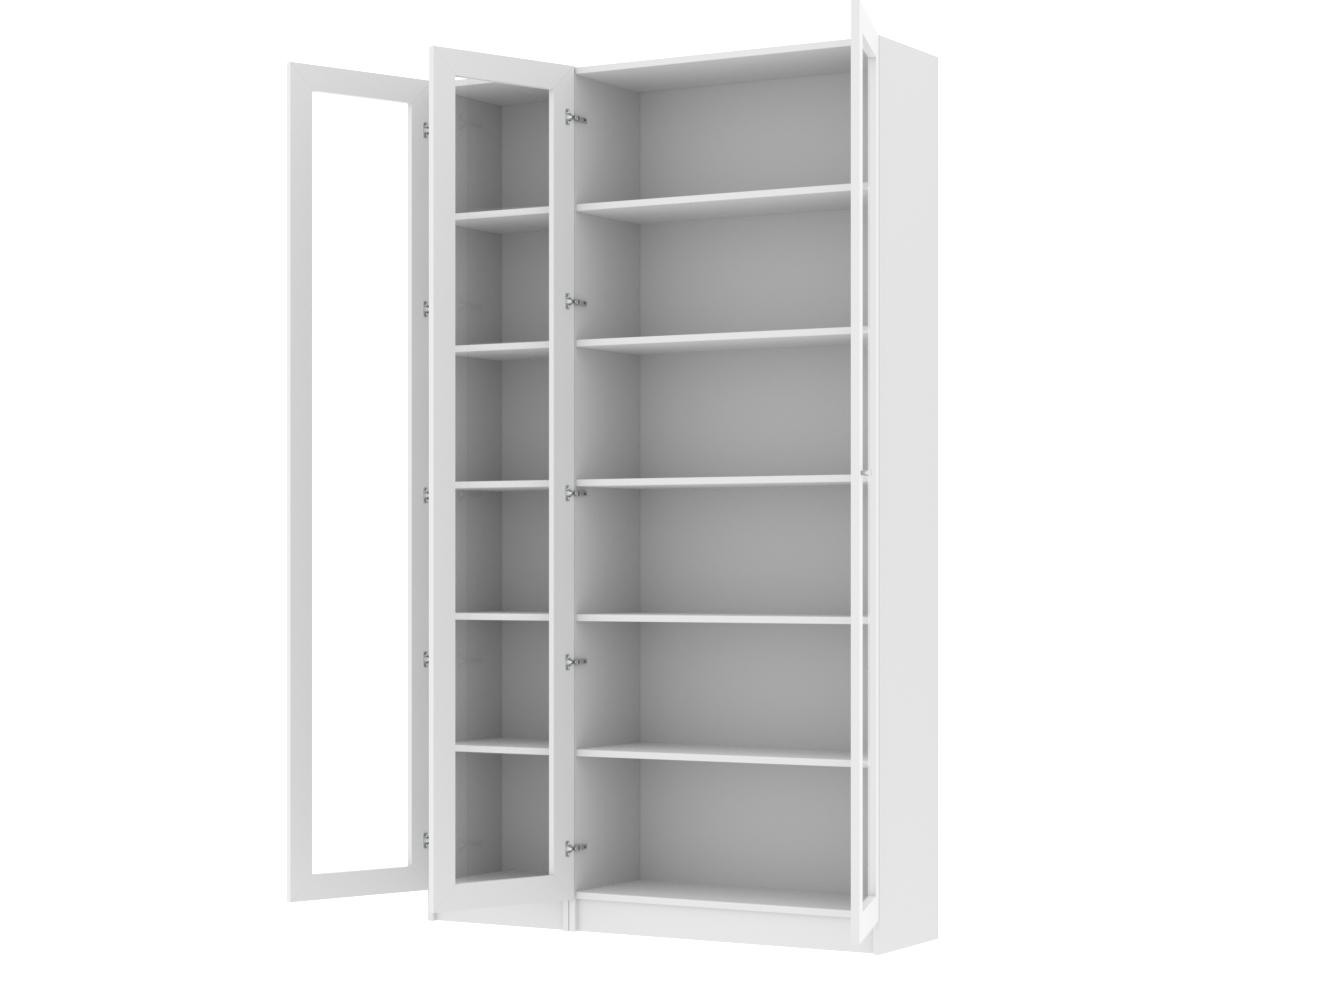  Книжный шкаф Билли 340 white ИКЕА (IKEA) изображение товара